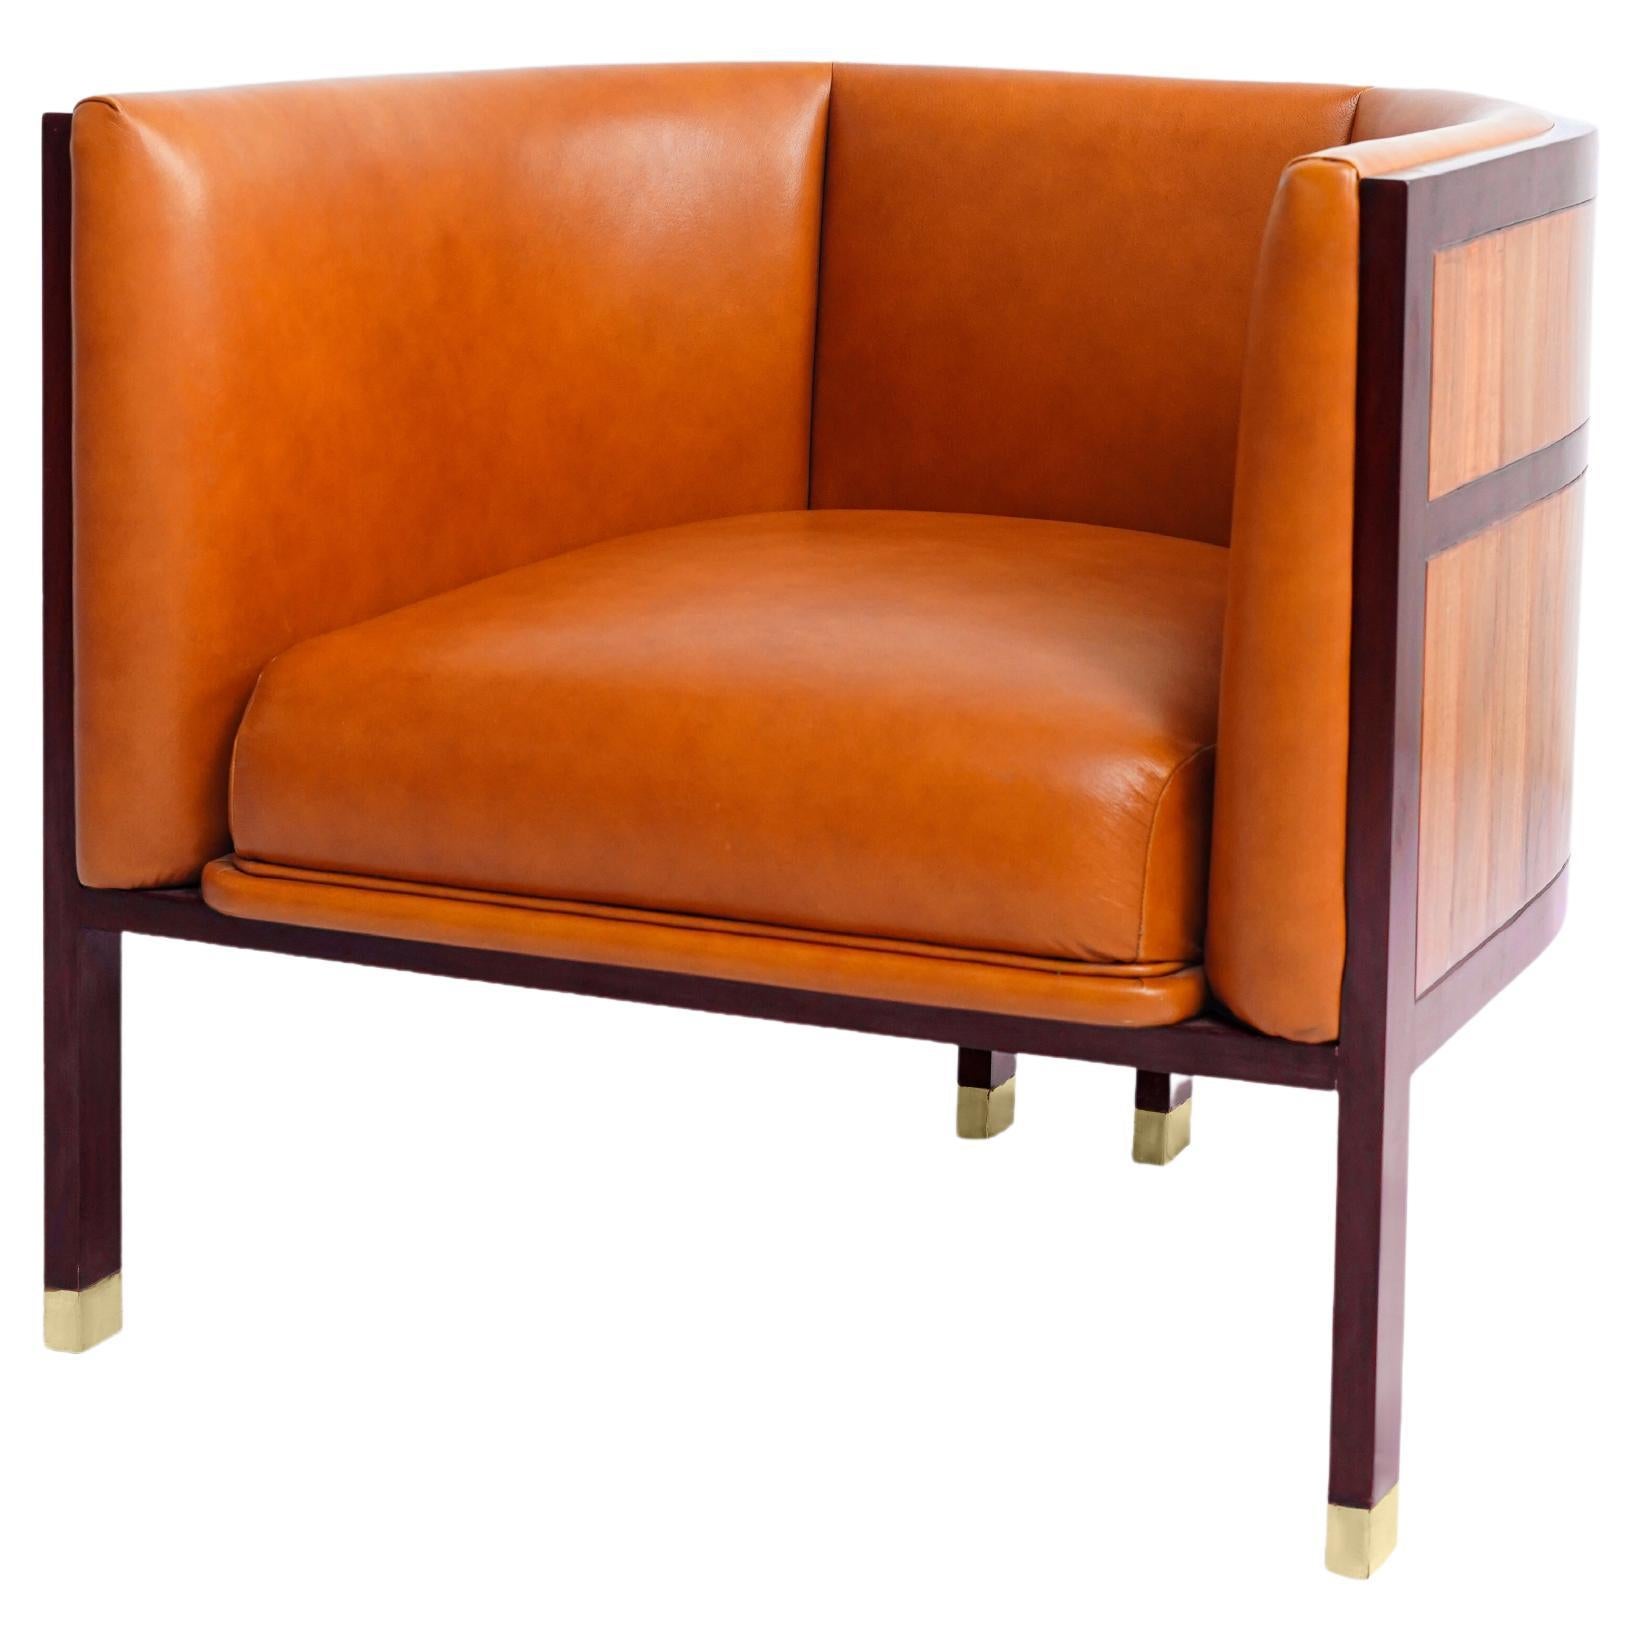 The Moderns Chair, Barrel Chair, round back chair, bold, modern, walnut wood